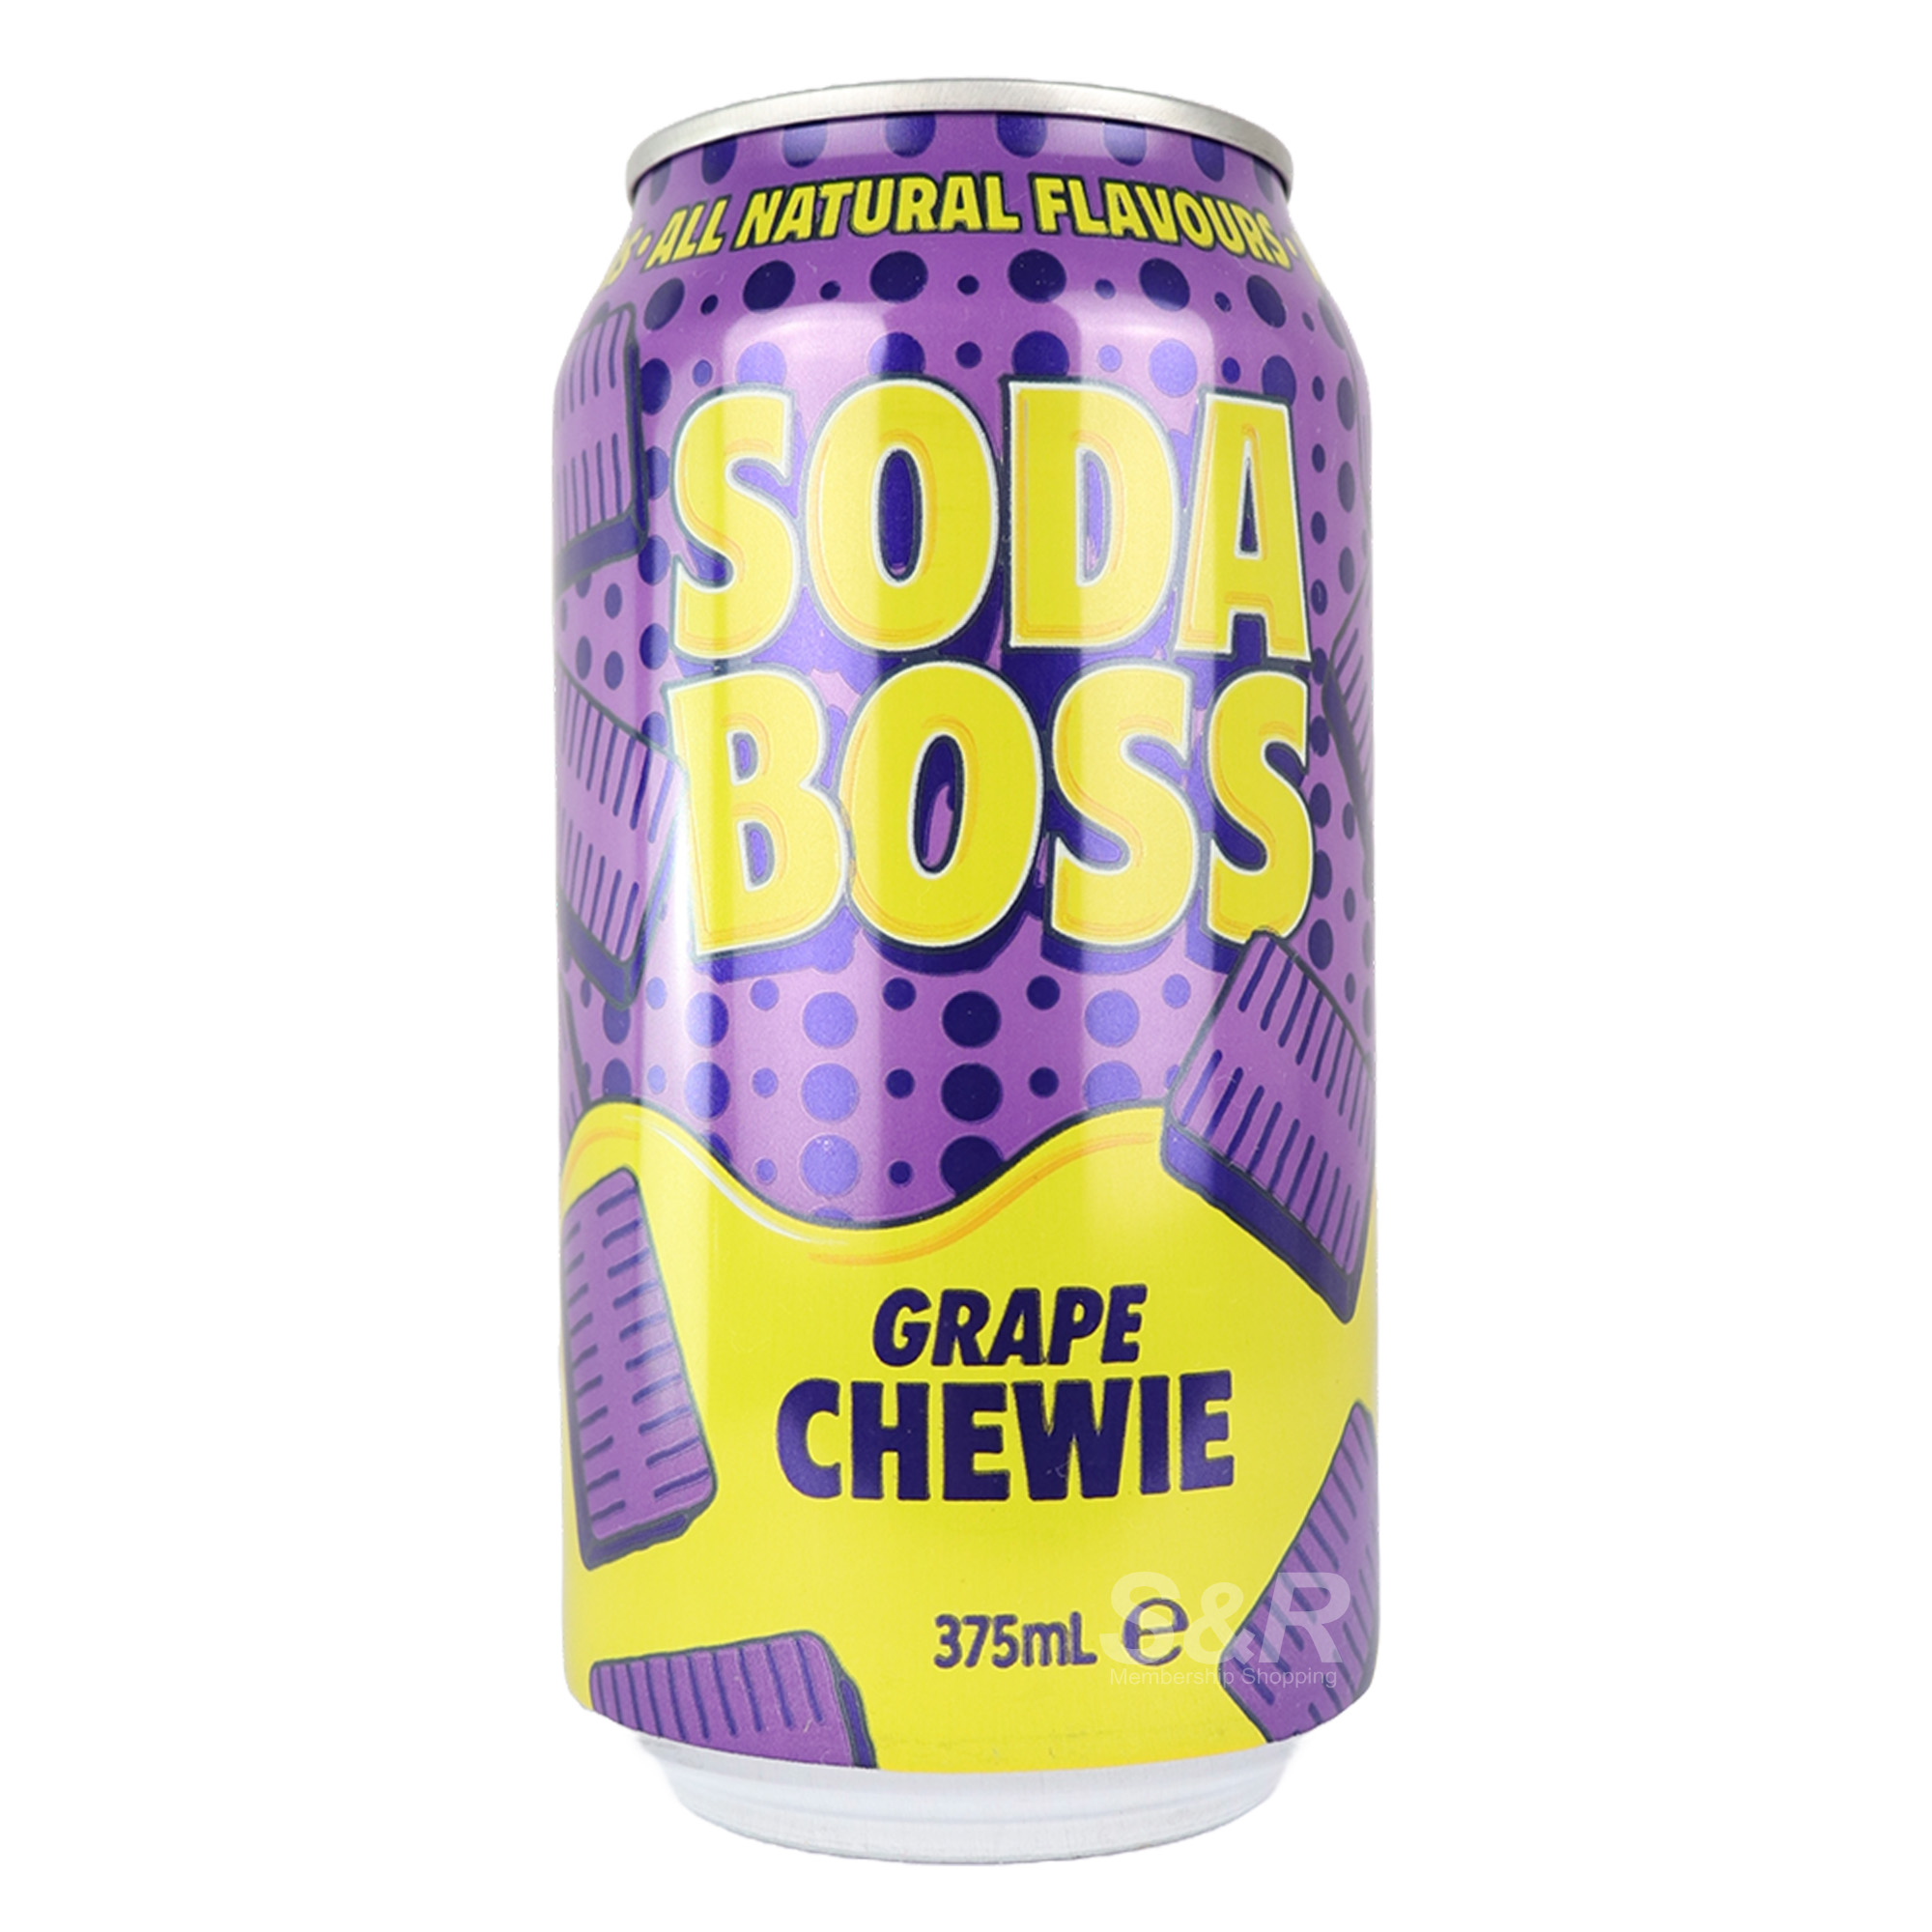 Soda Boss Grape Chewie 375mL